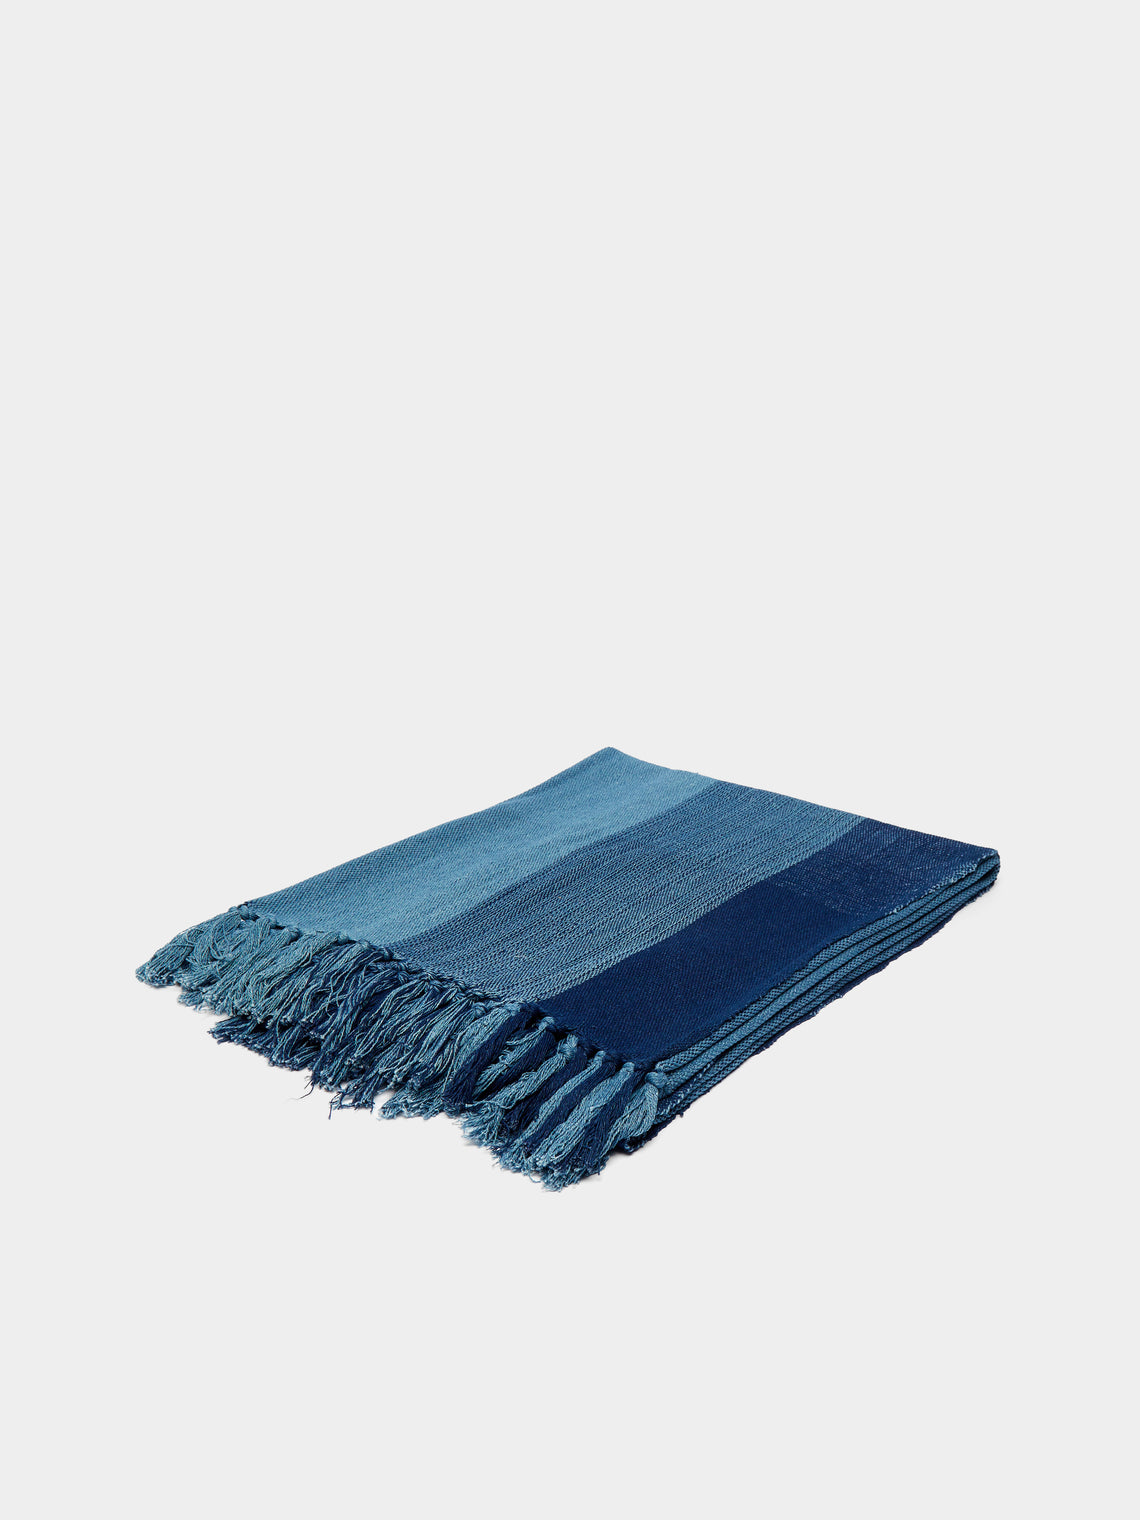 Hollie Ward - Ordahl Indigo-Dyed Handwoven Cotton Blanket -  - ABASK